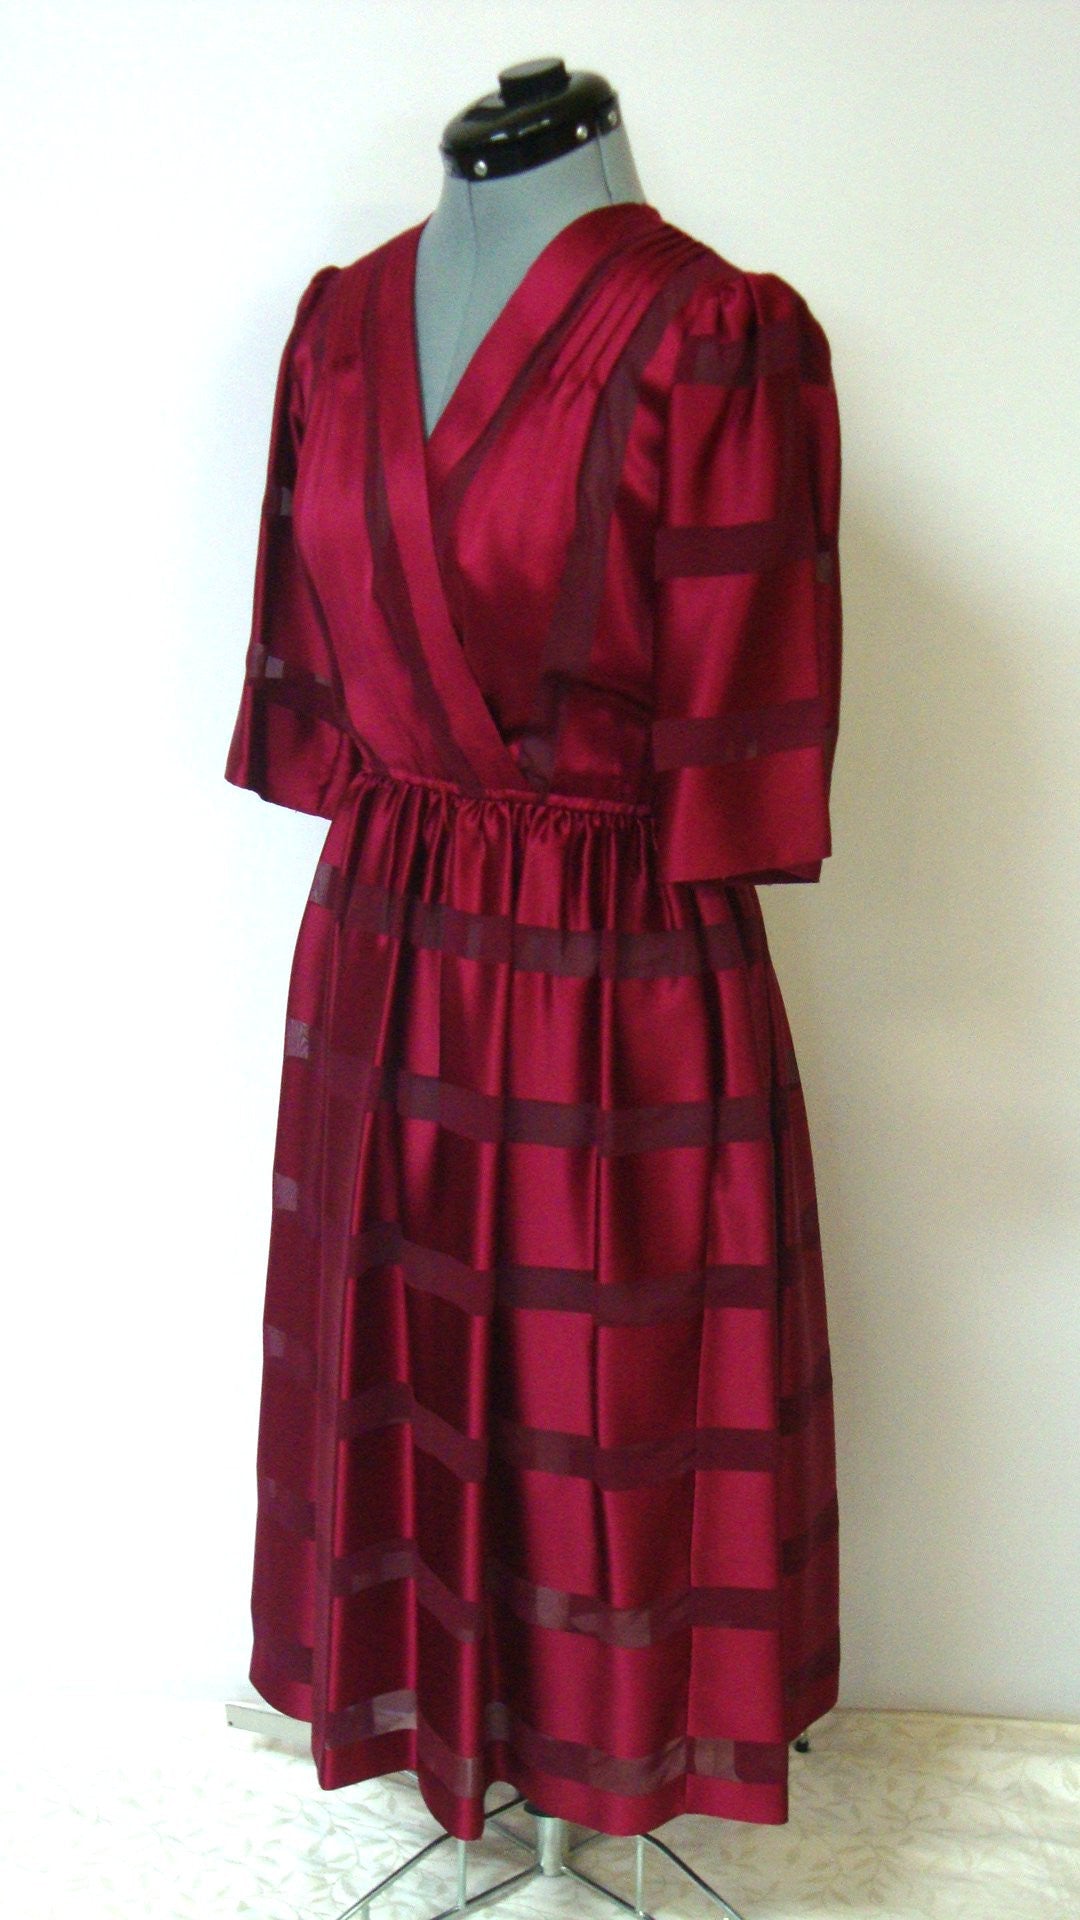 Vintage SWEET TALK RED BURGUNDY SILK STRIPED SHEER FULL SKIRT COCKTAIL DRESS SMALL 5 6